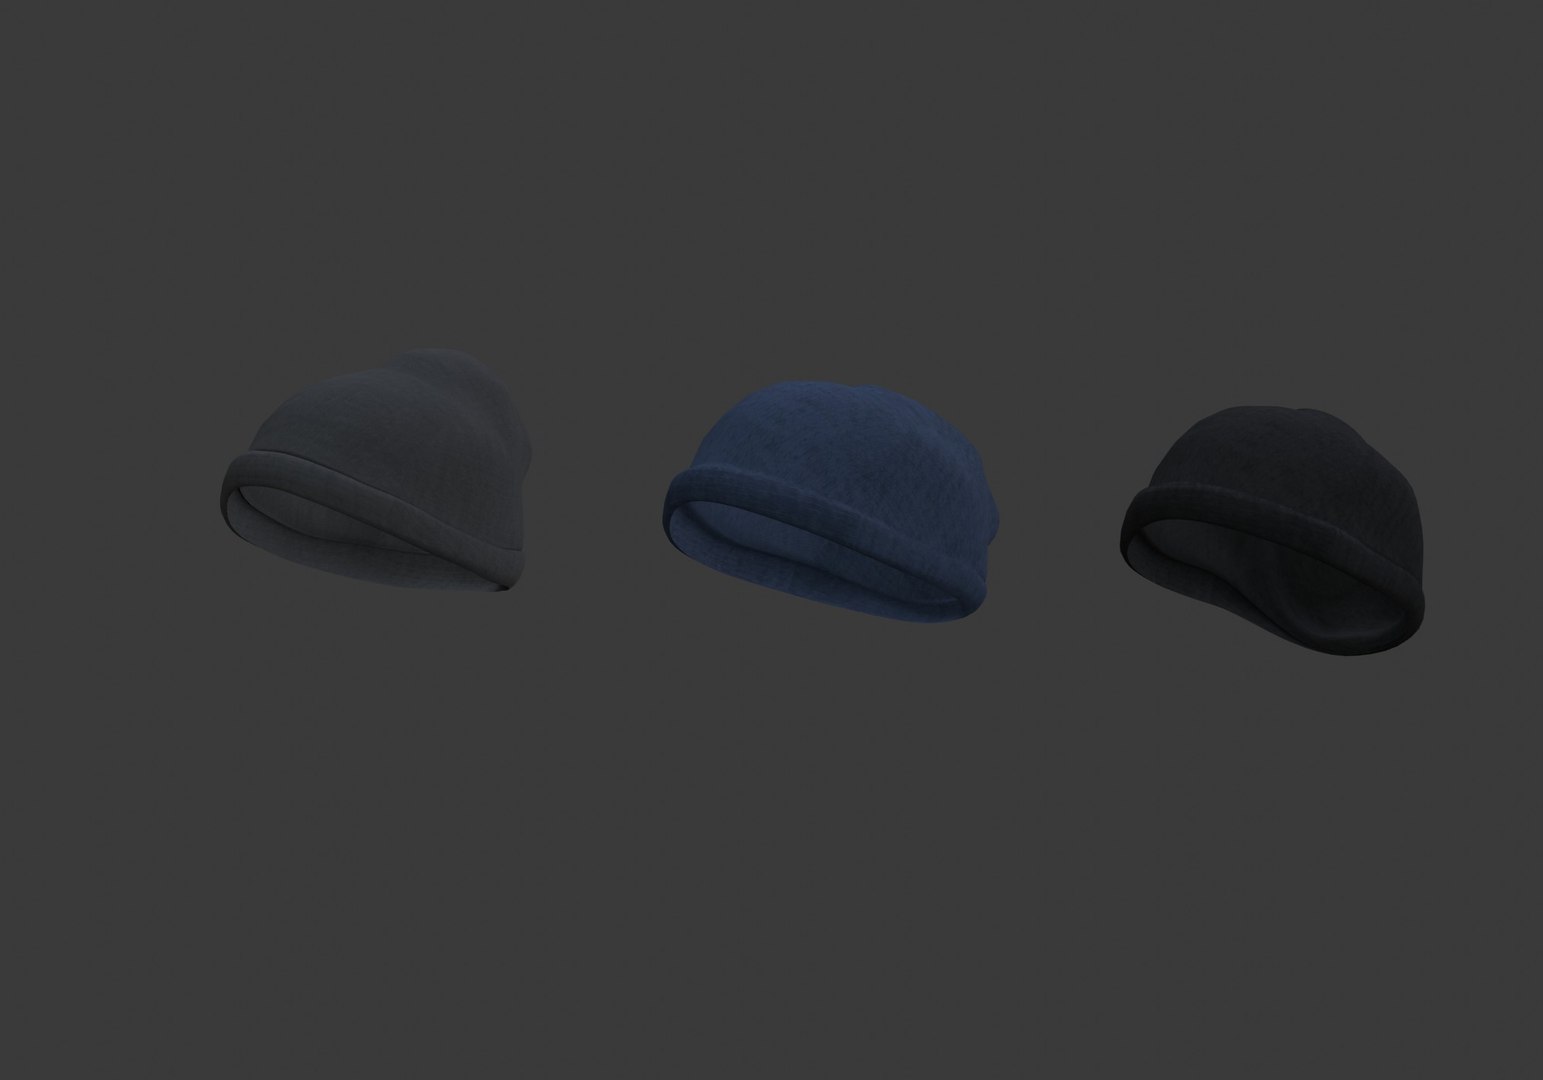 3x hats collection 3D model - TurboSquid 1896347